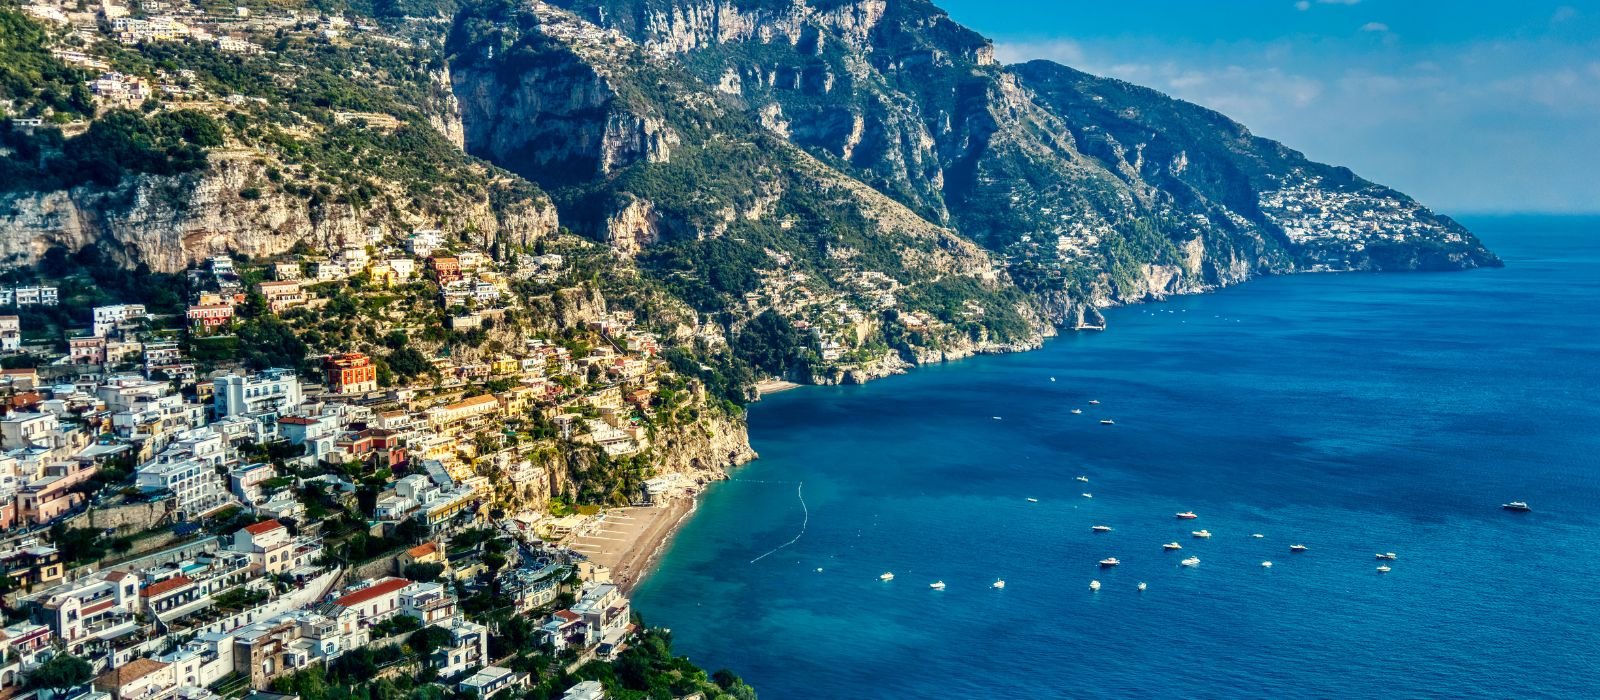 Best Time to Visit Amalfi Coast